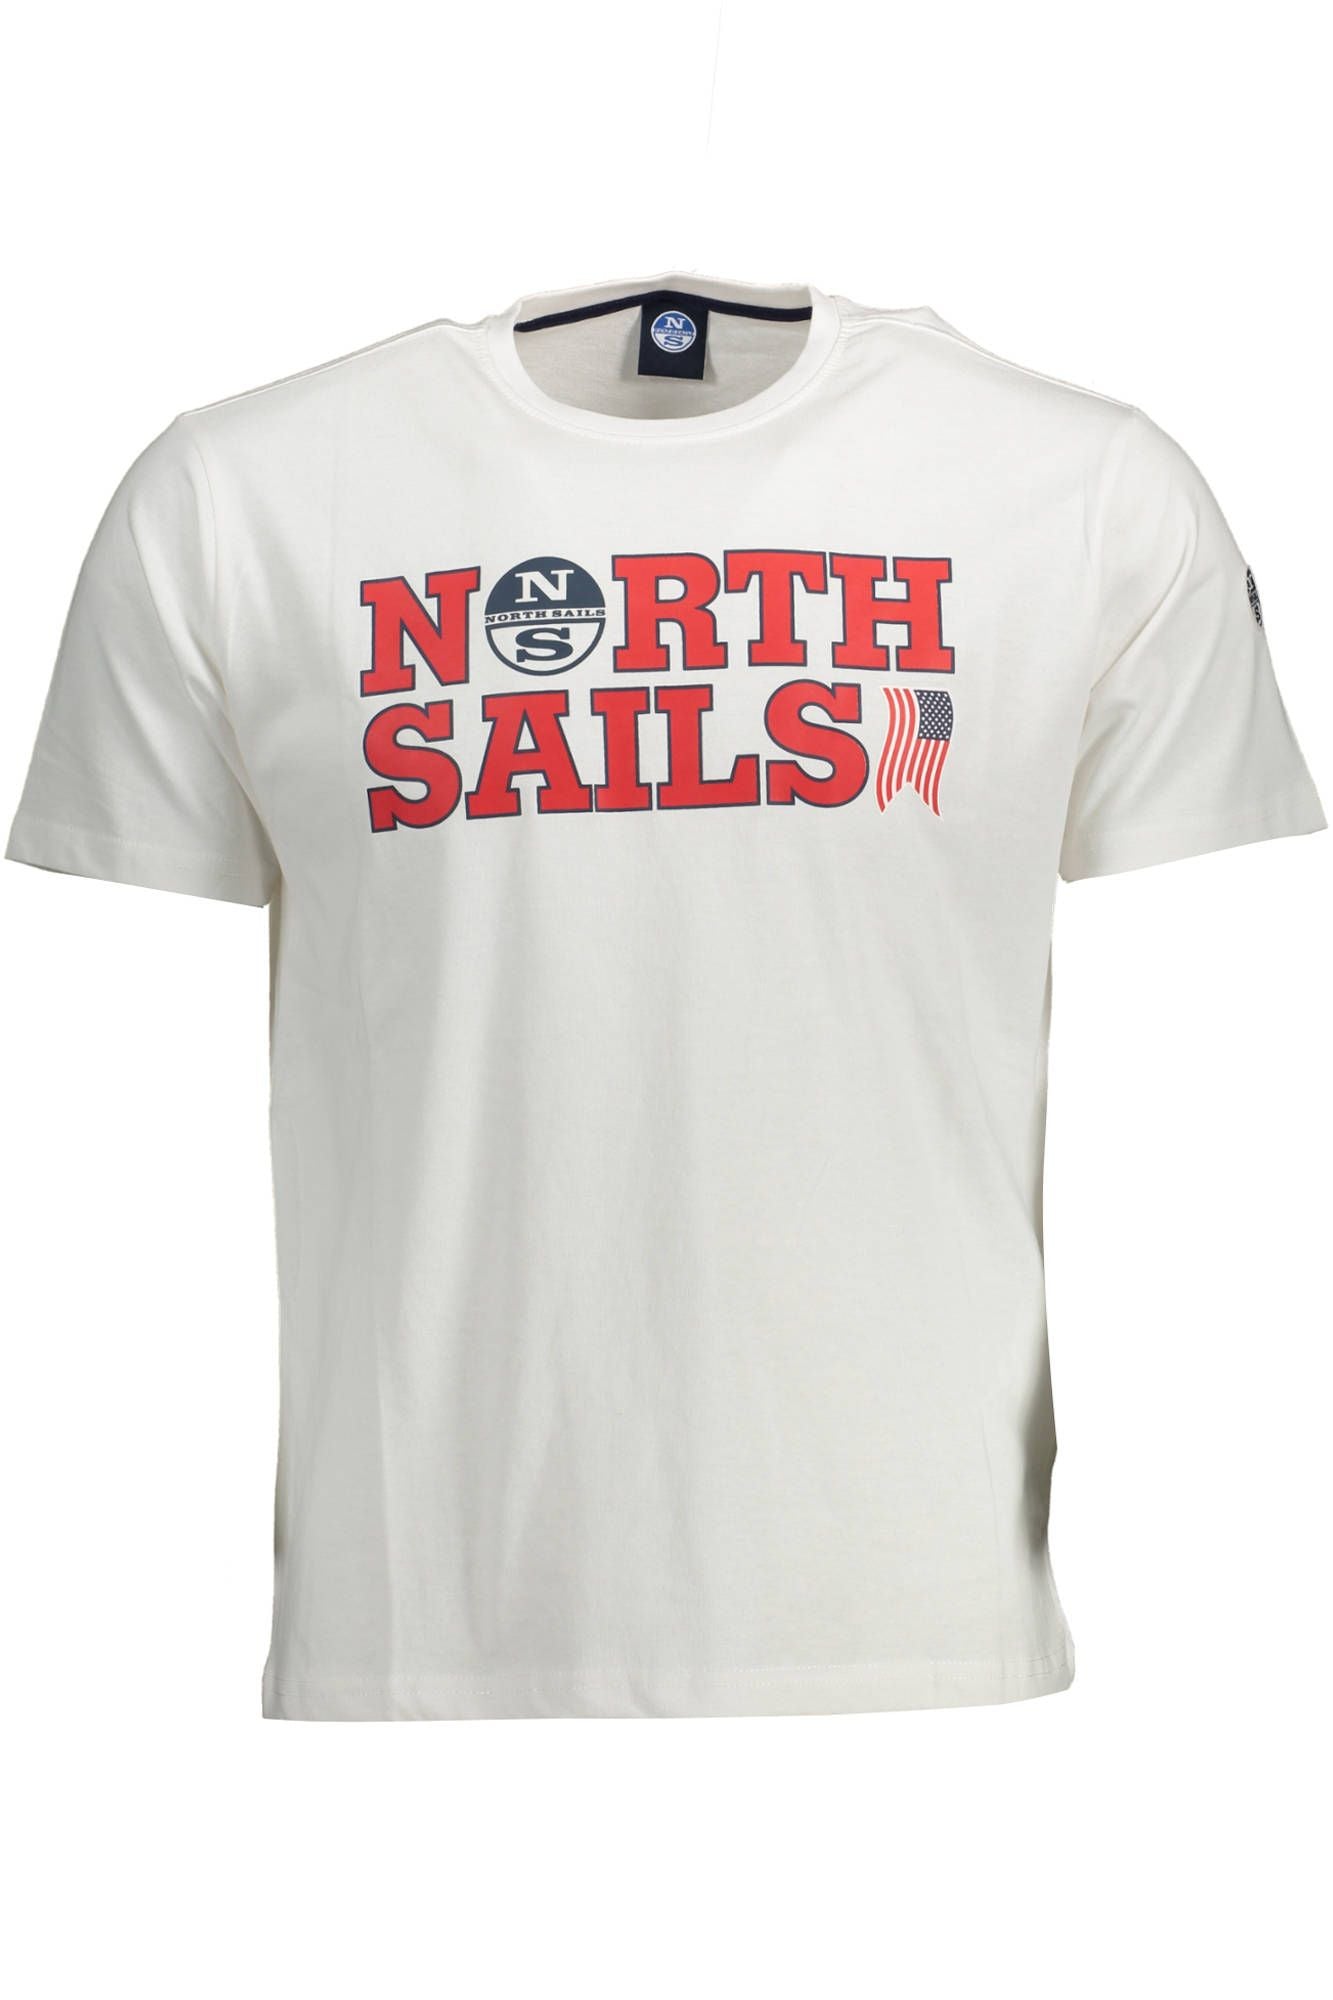 North Sails Sleek White Cotton Crew Neck Tee